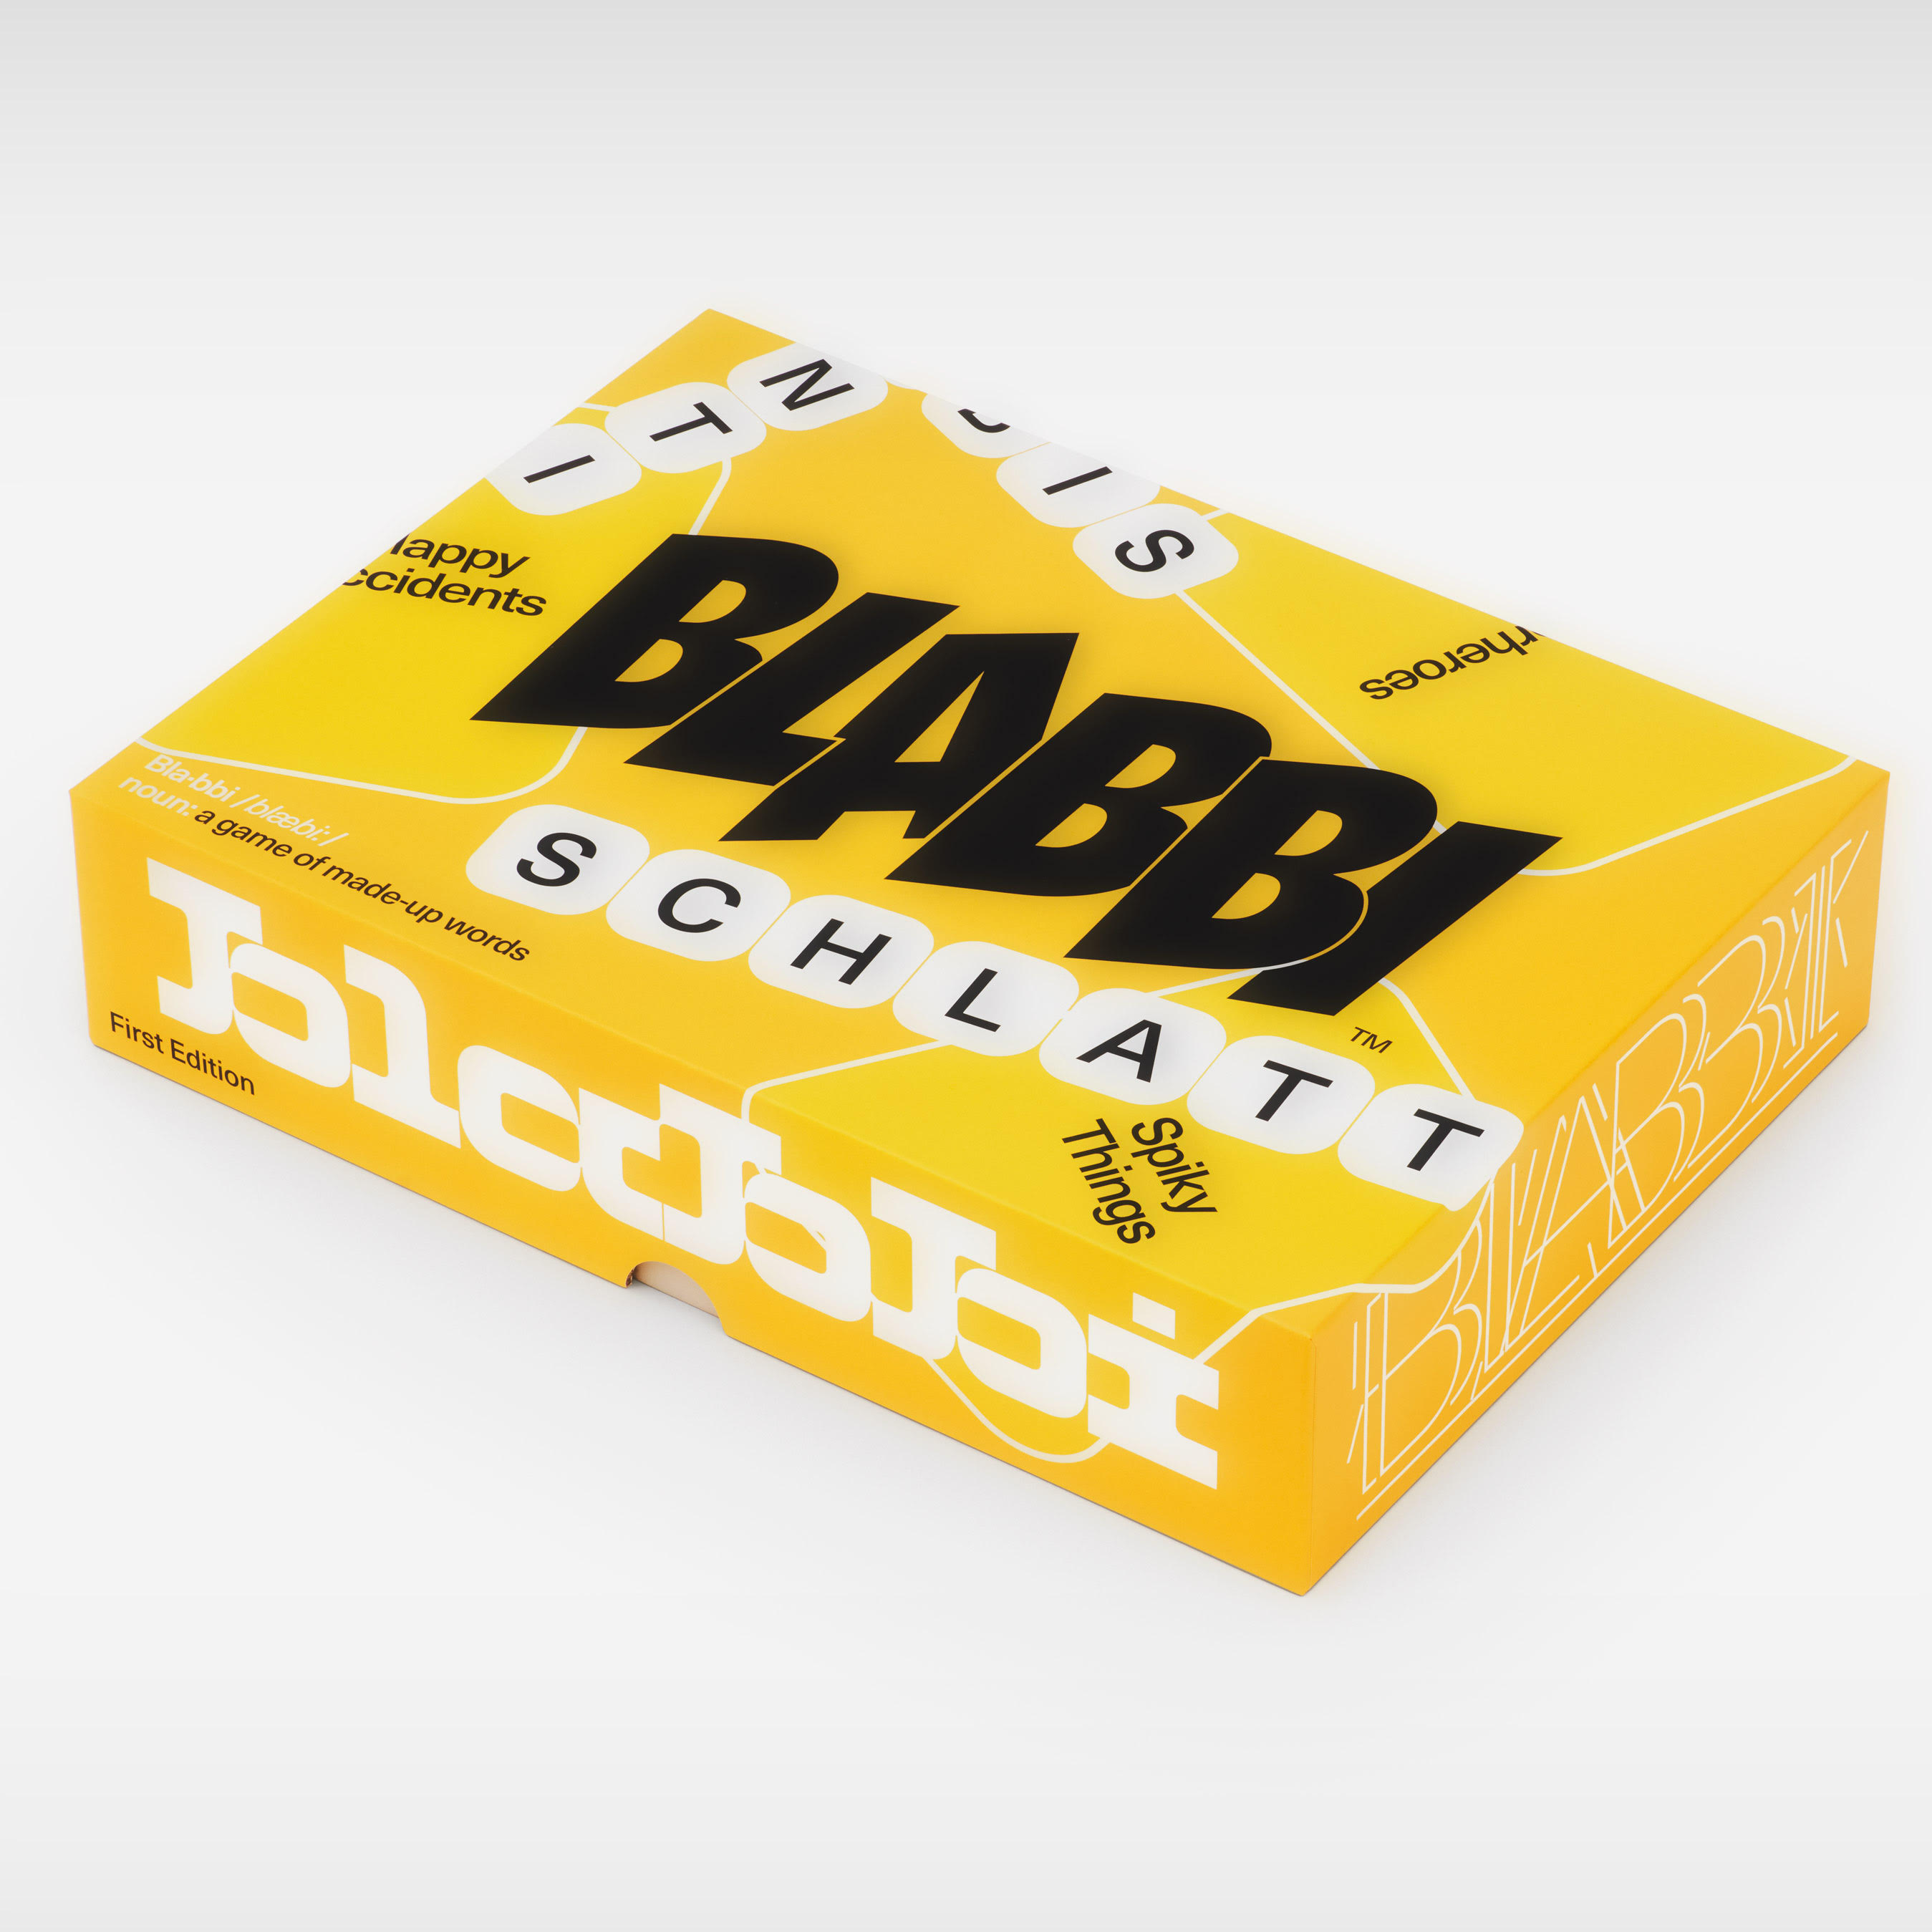 Blabbi box